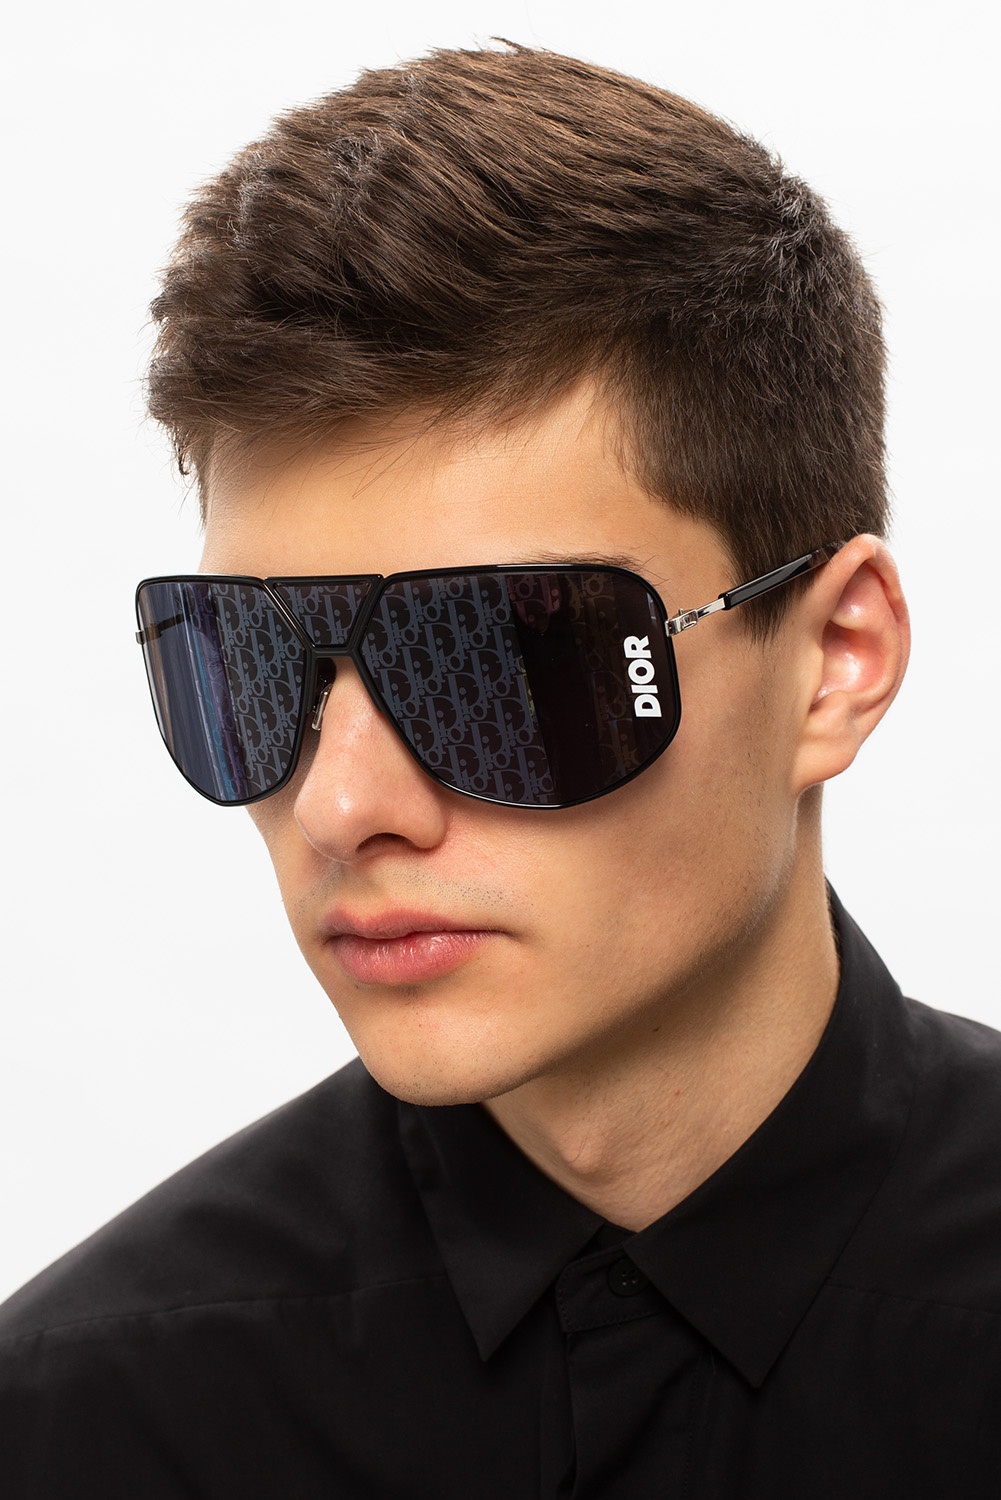 ultra dior sunglasses